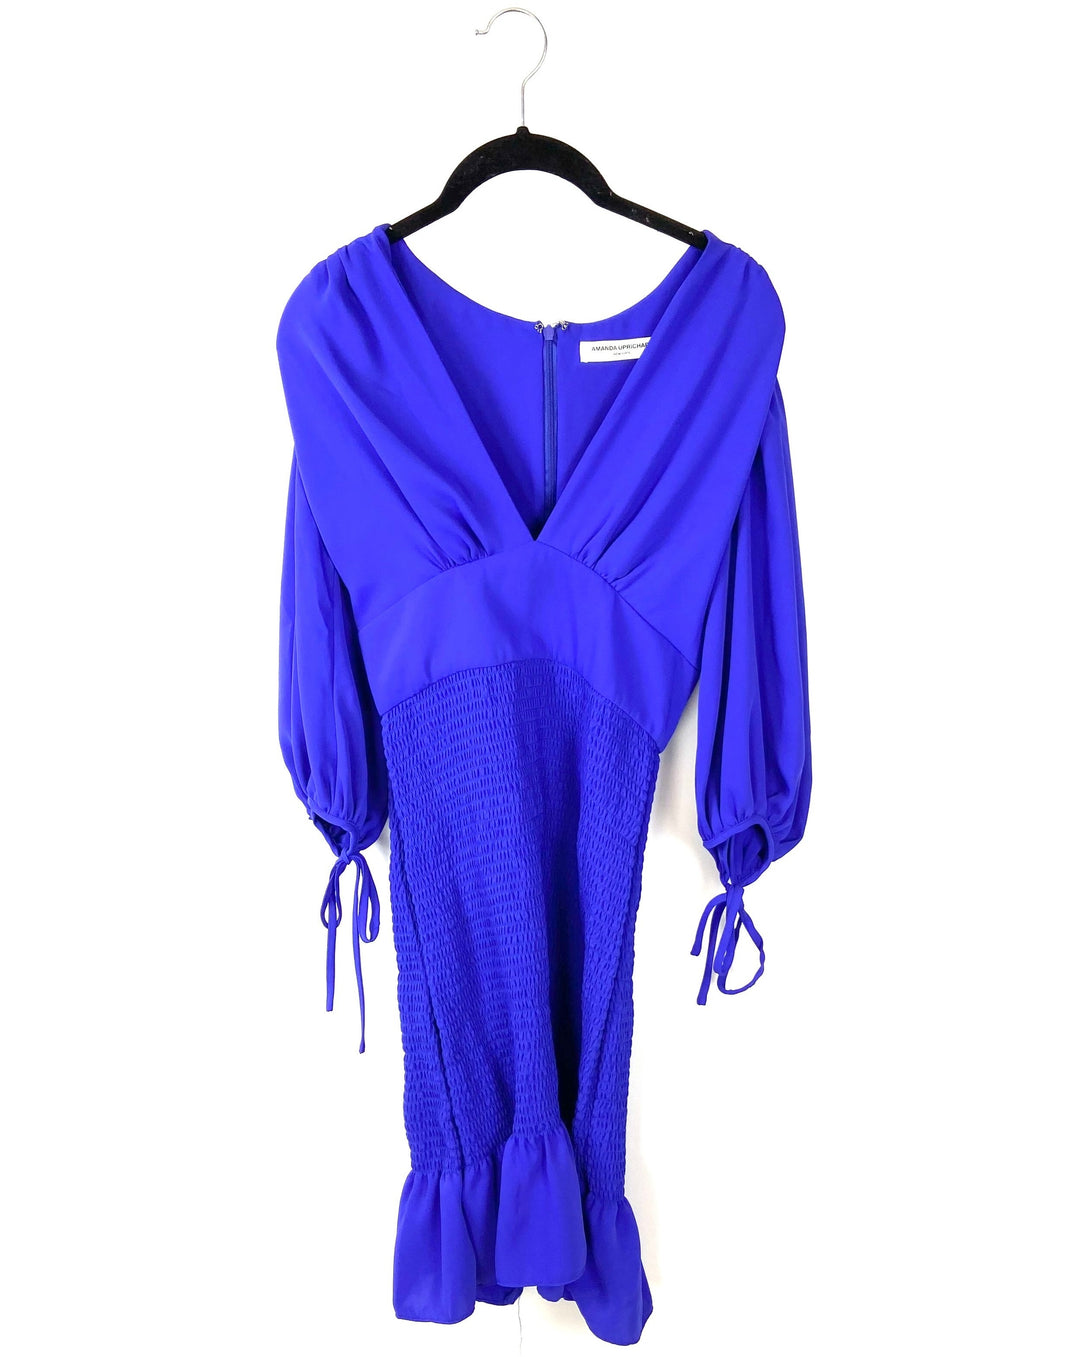 Purple Smocked Dress - Size 2/4